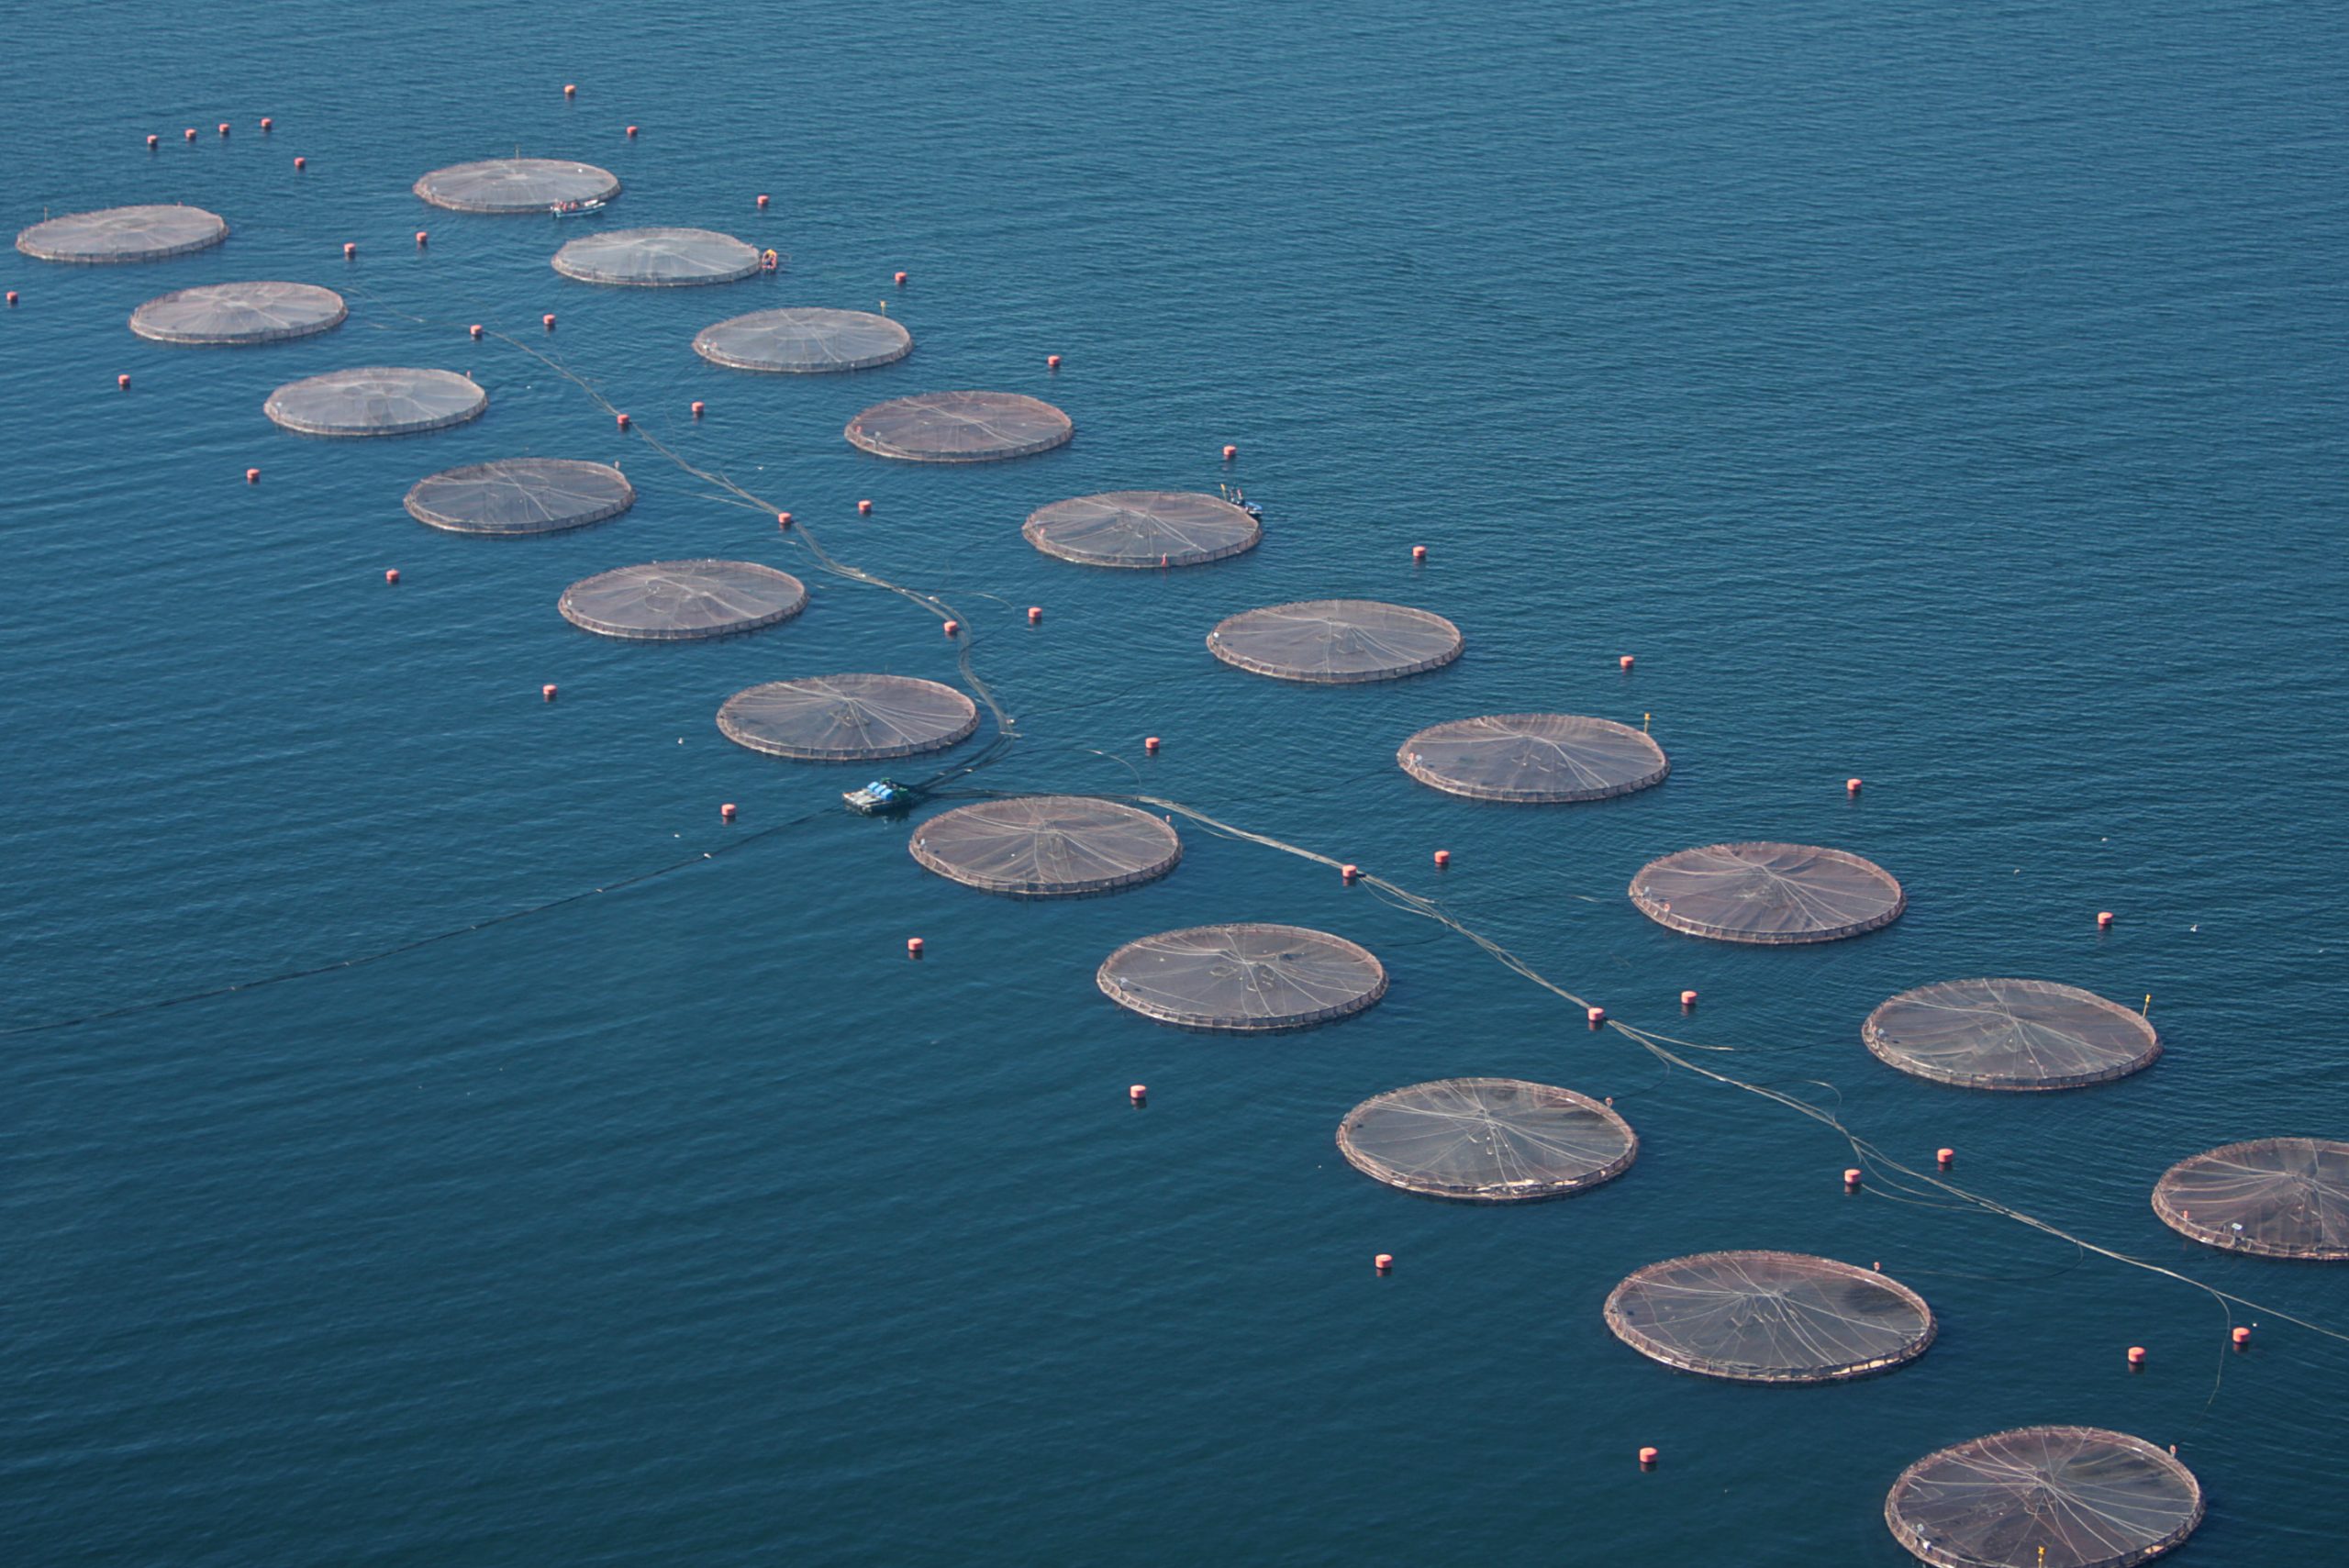 Blumar inicia plan de recaptura de cerca de 800 mil de salmones que escaparon de centro de cultivo